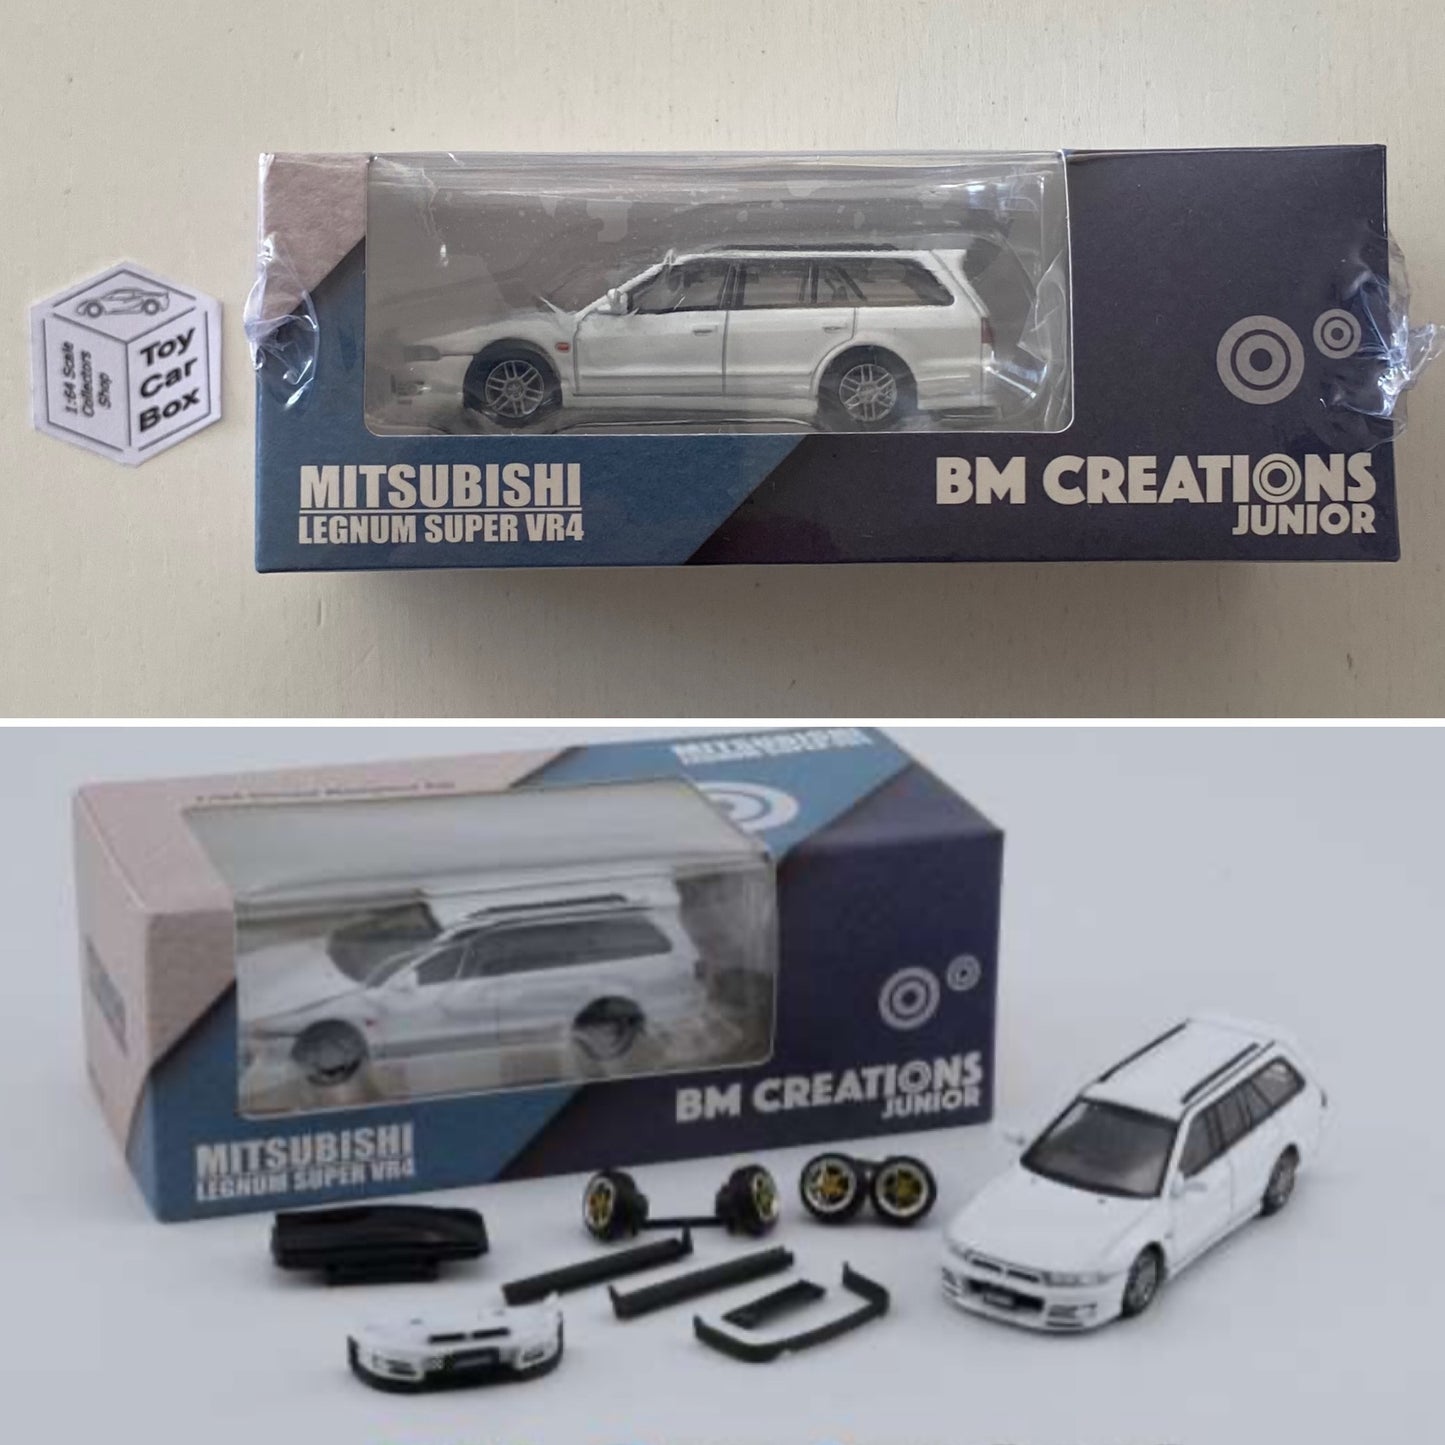 BM CREATIONS - Mitsubishi Legnum Super VR4 (1:64 Scale - White - RHD) N66